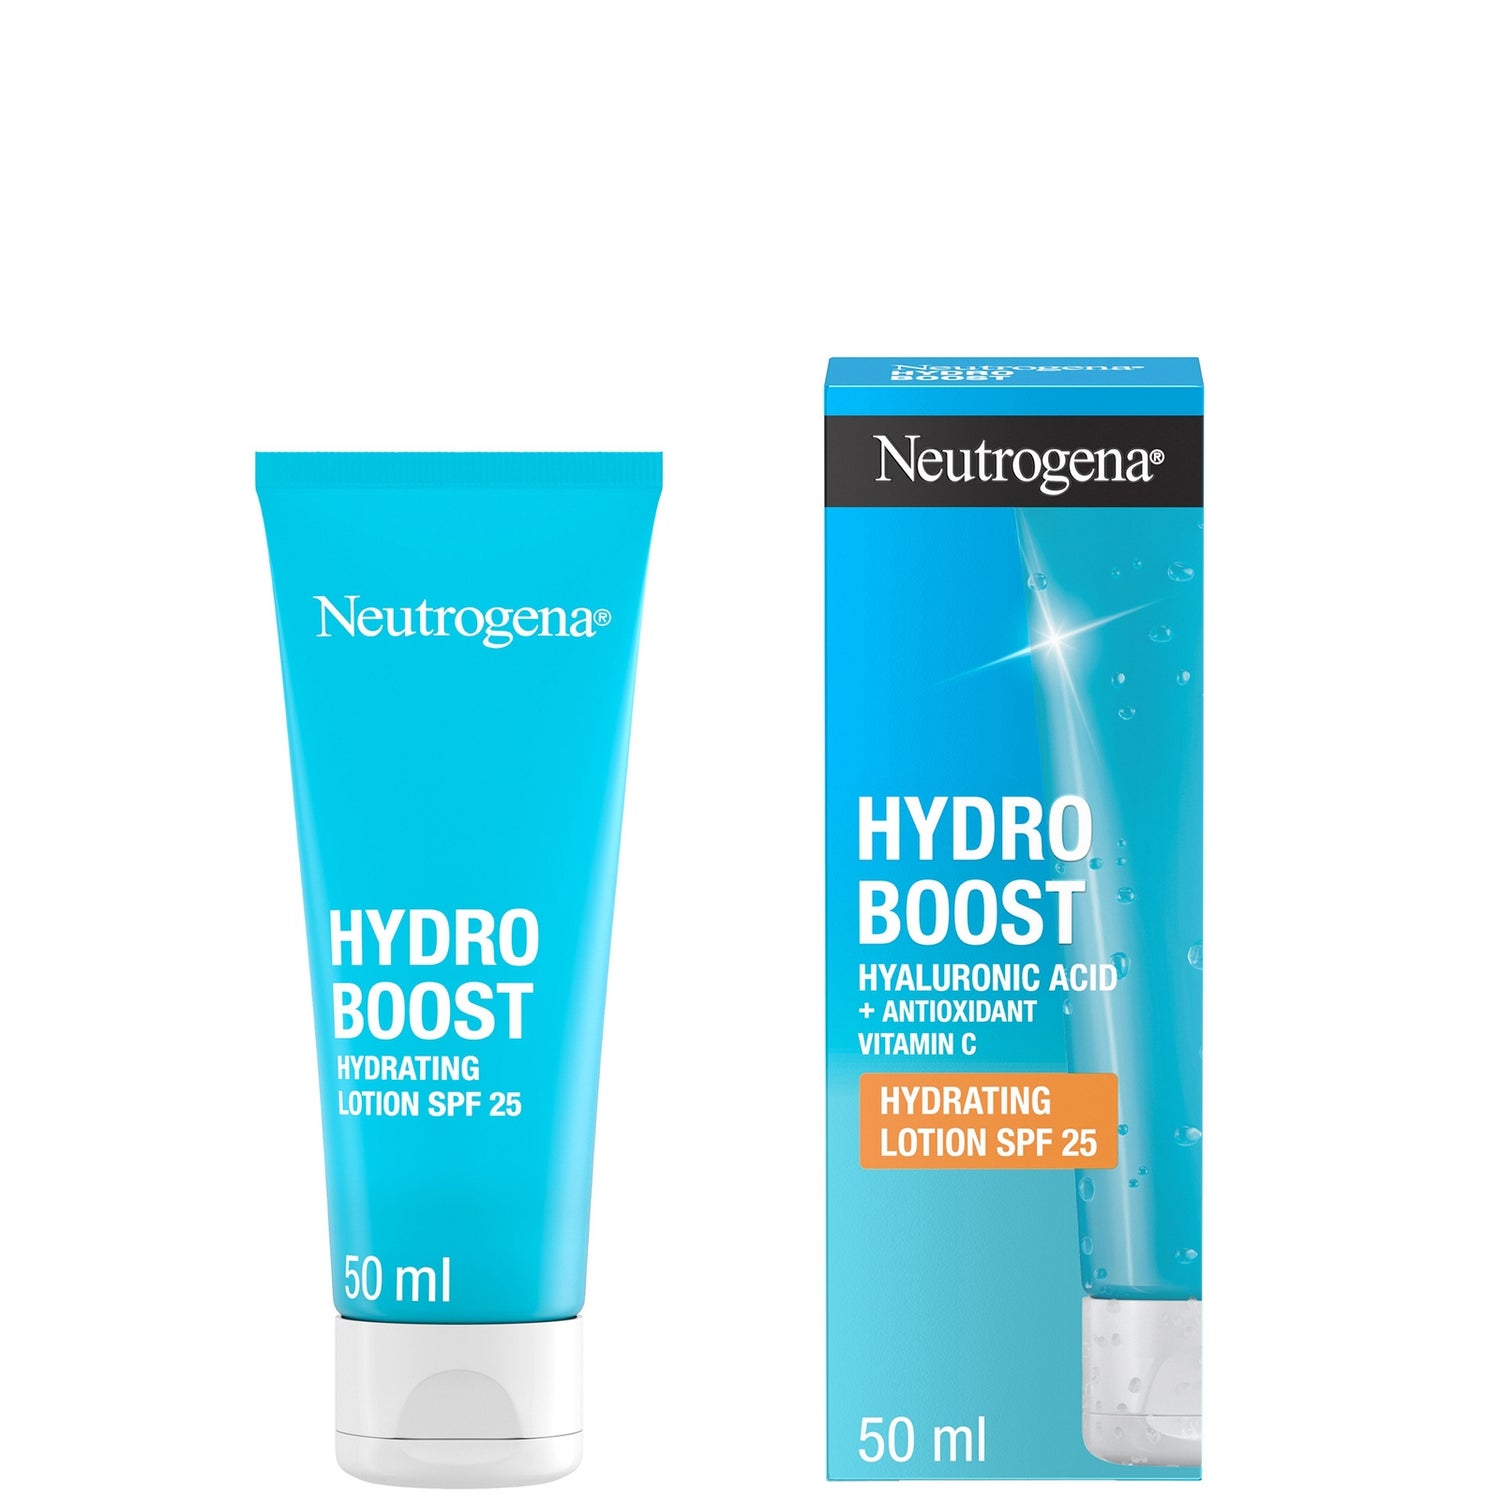 Neutrogena Hydro Boost City Shield SPF25 Moisturizer and Facial Sunscreen 50ml